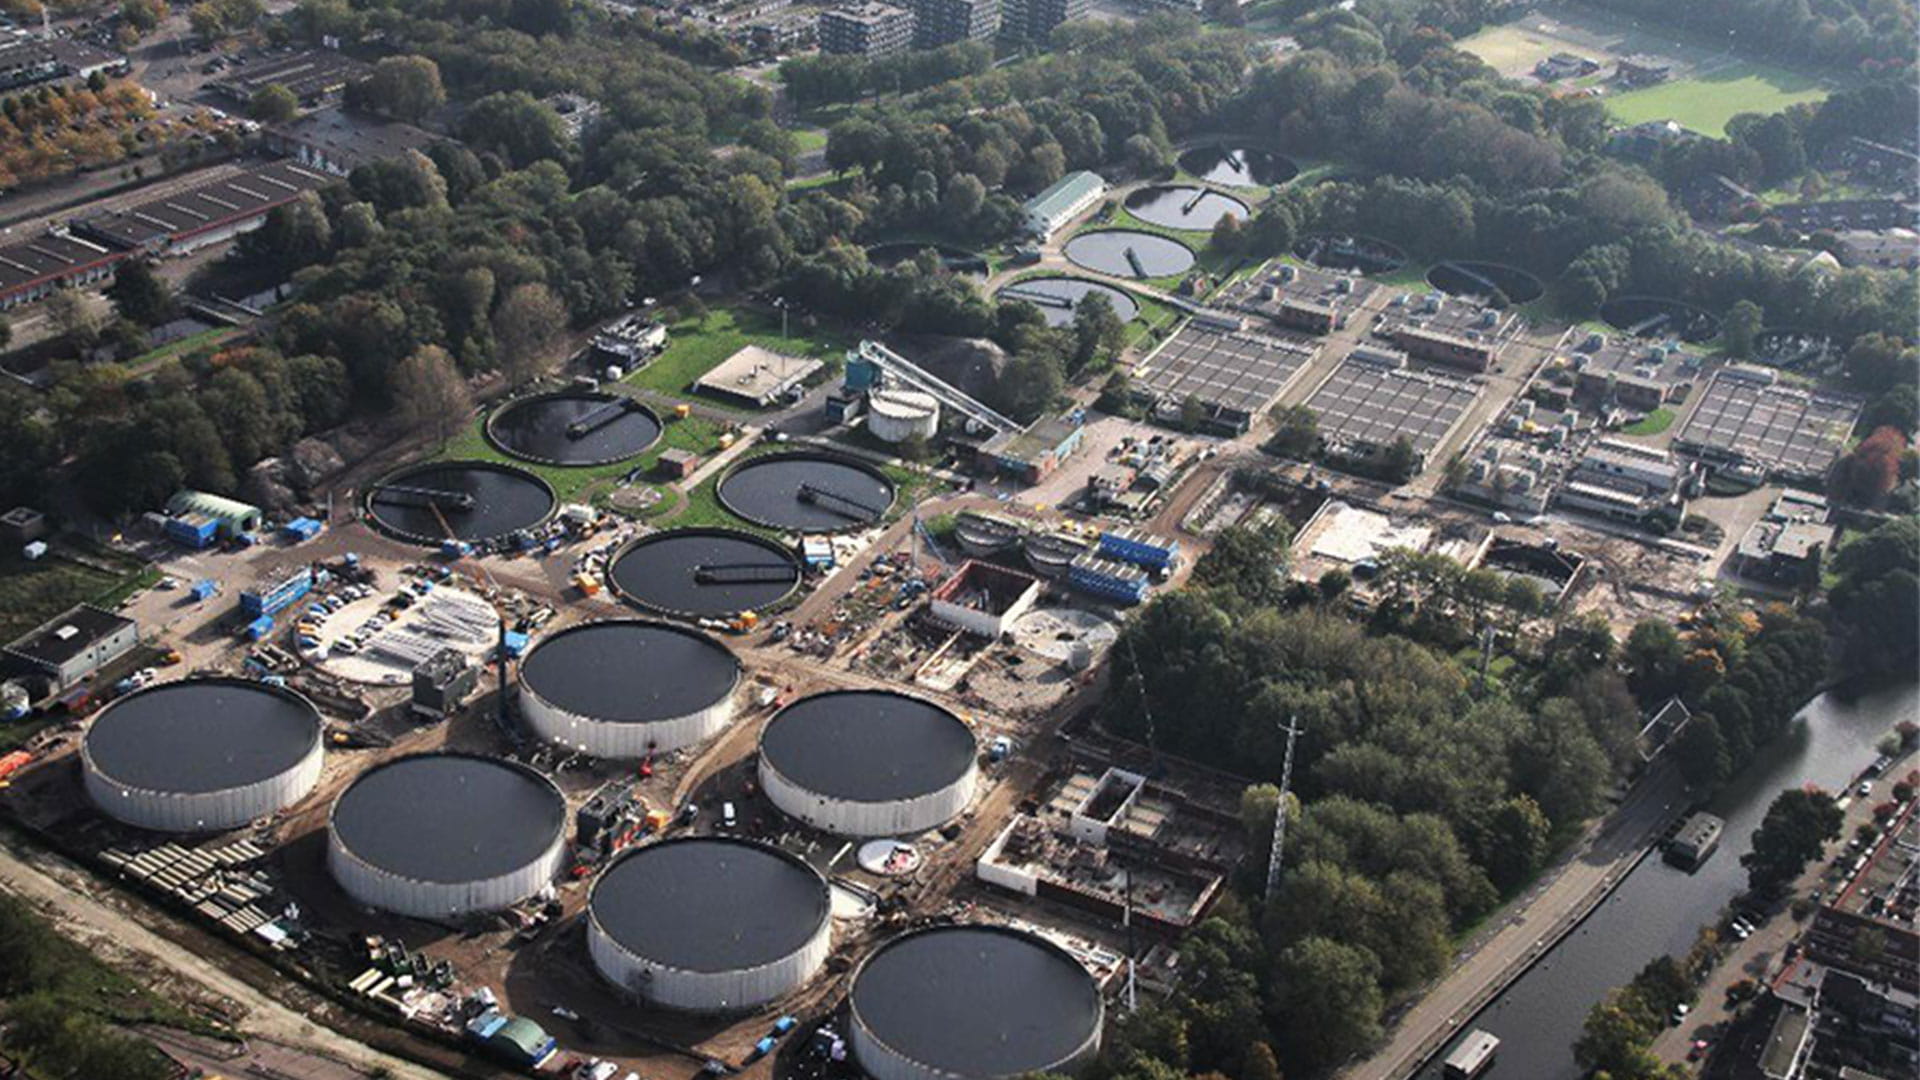 Sewage treatment plant in Utrecht